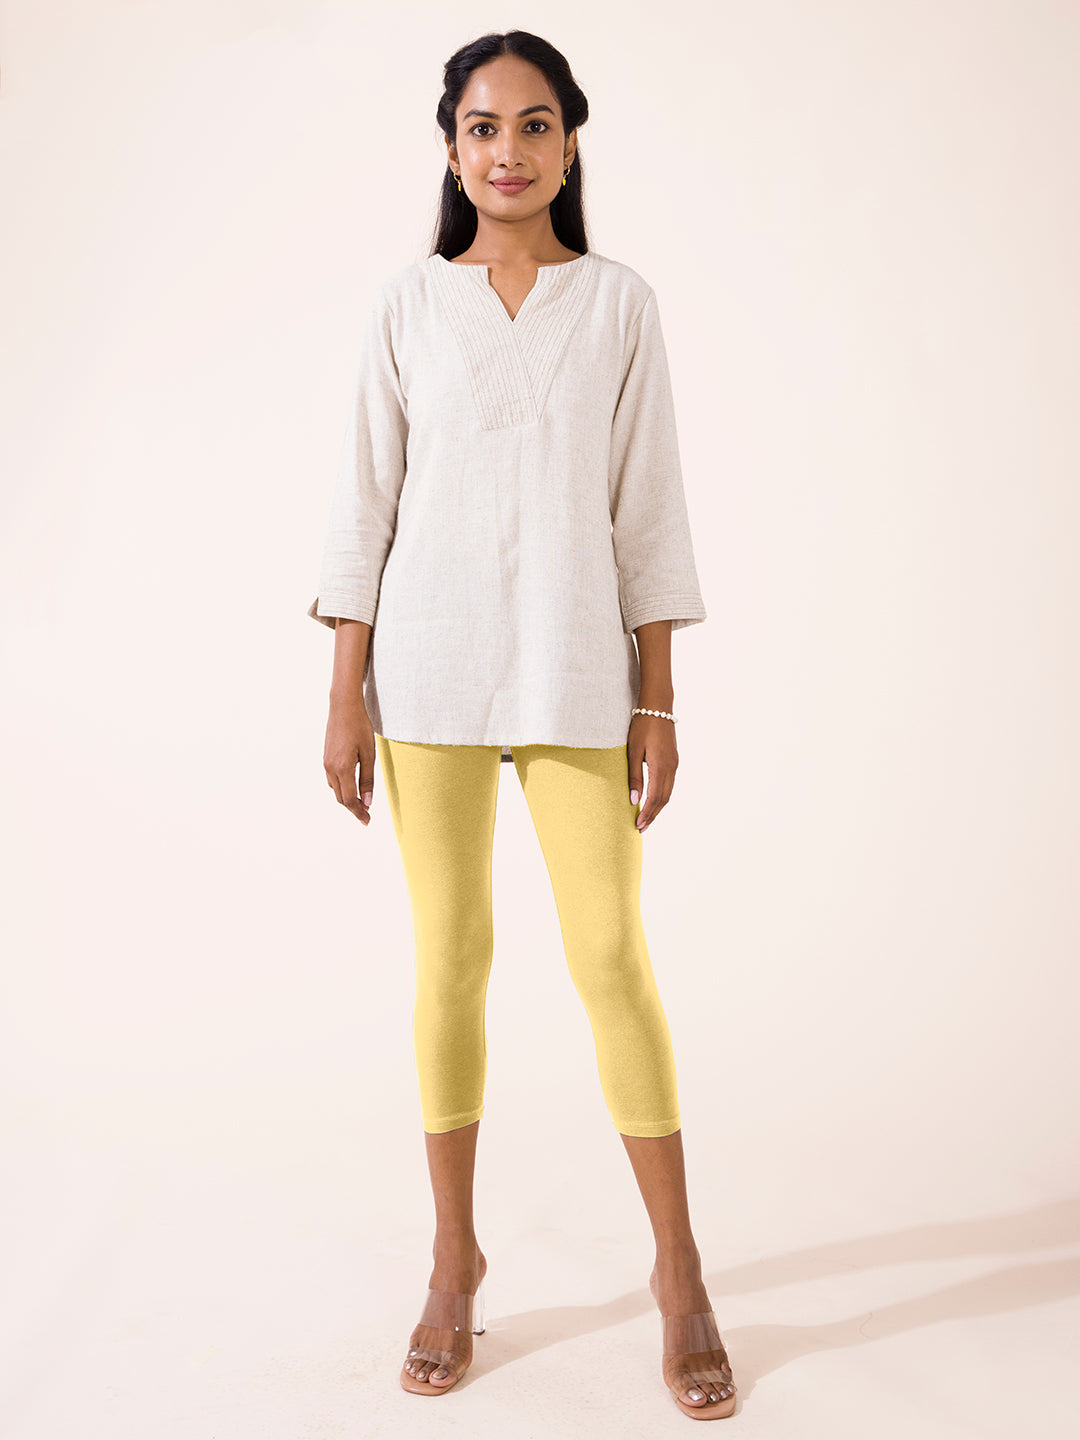 Buy Mustard Yellow Leggings for Women by Twin Birds Online | Ajio.com